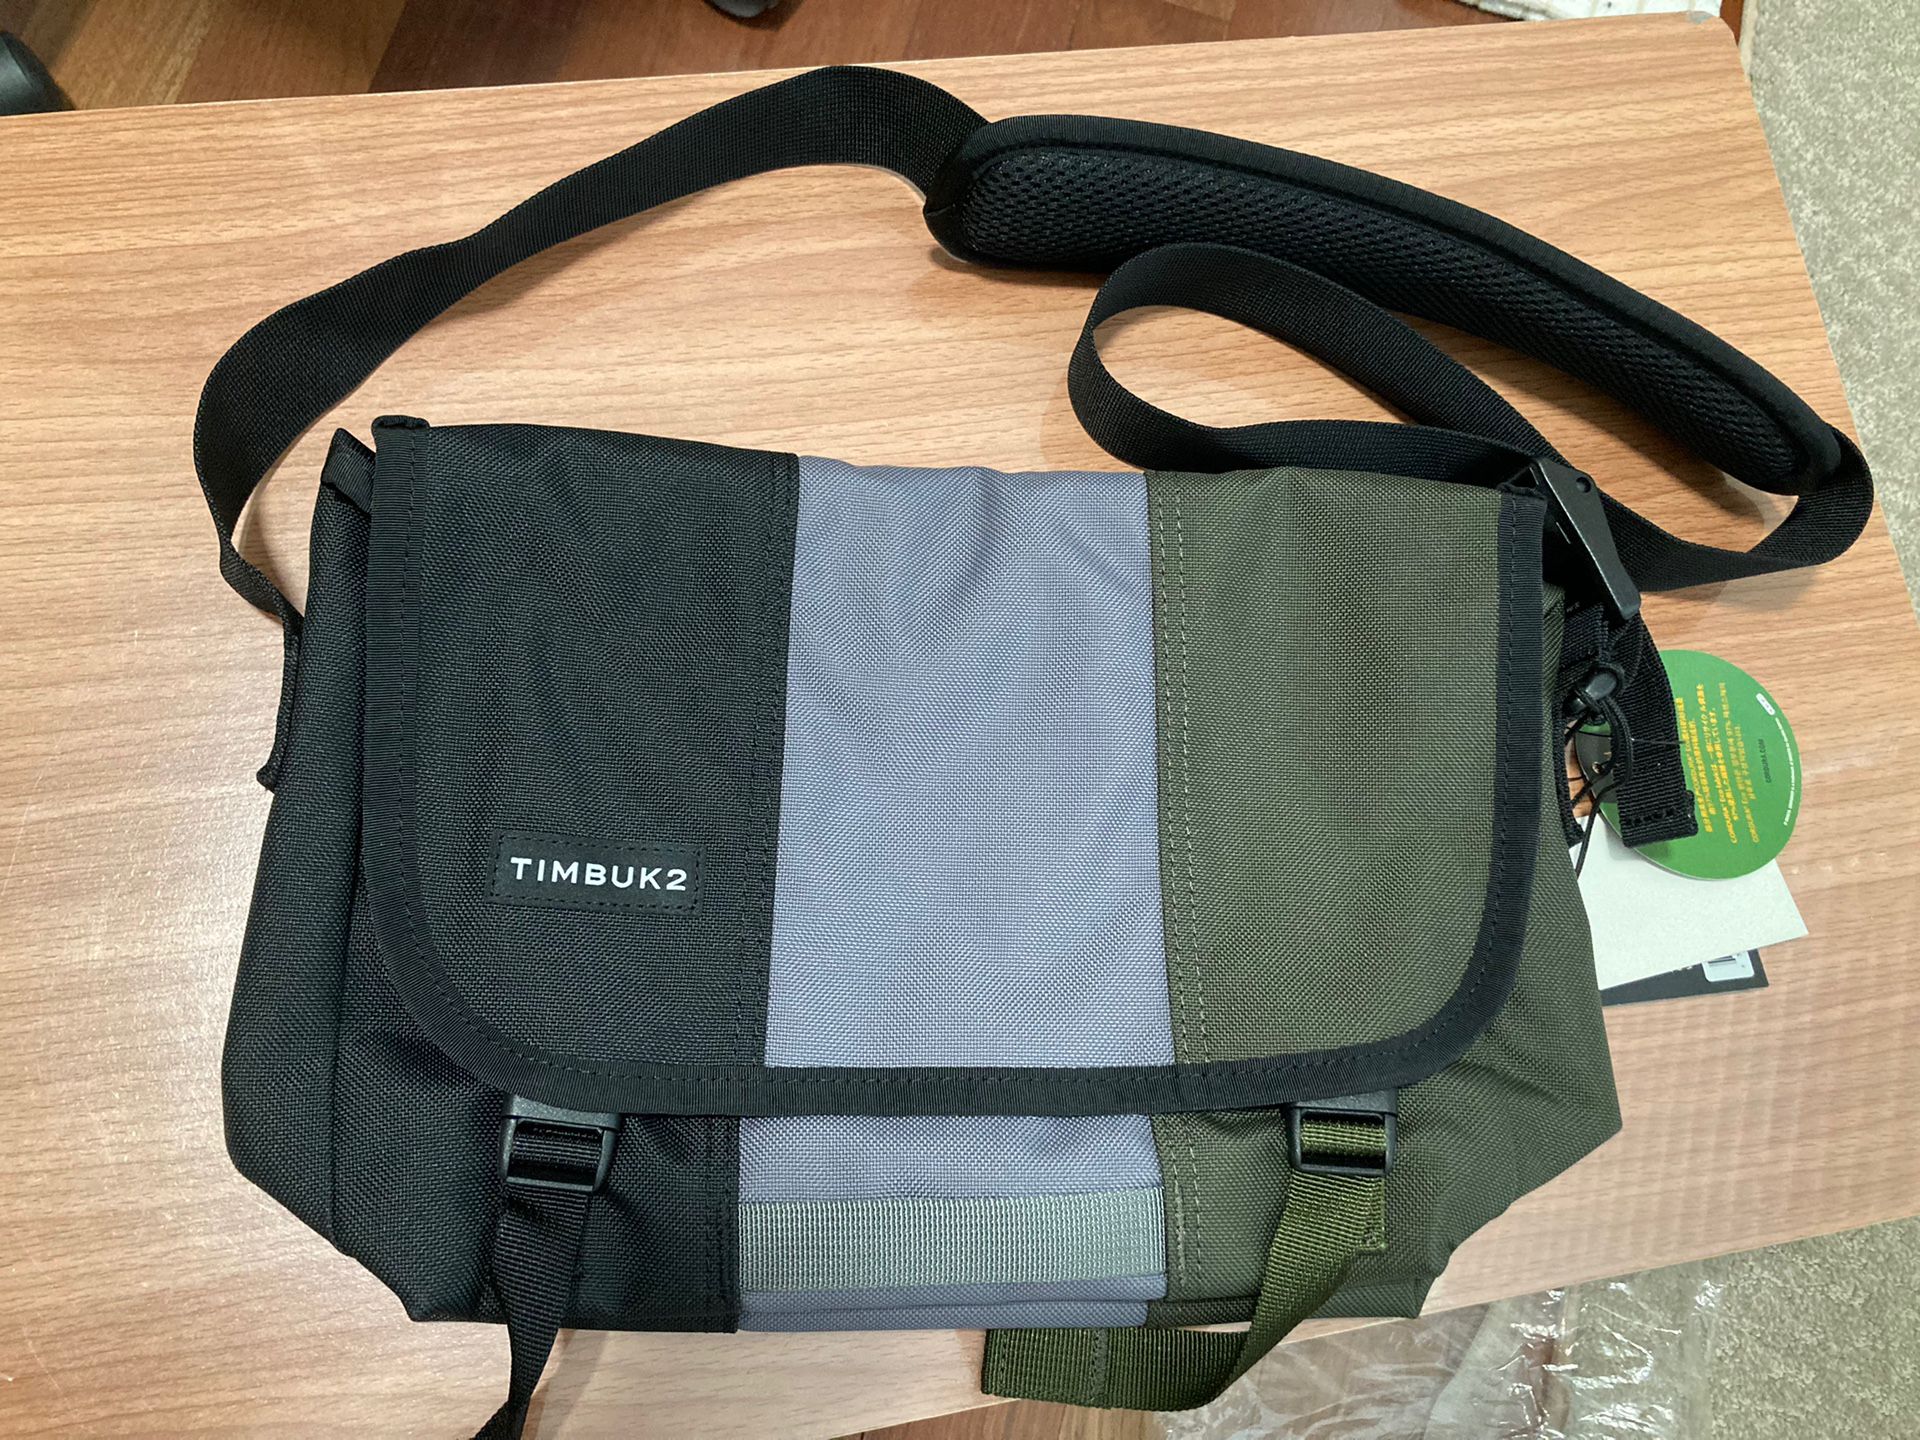 NEW Timbuk2 Classic Messenger Bag XS In Black-Gray-Green Color